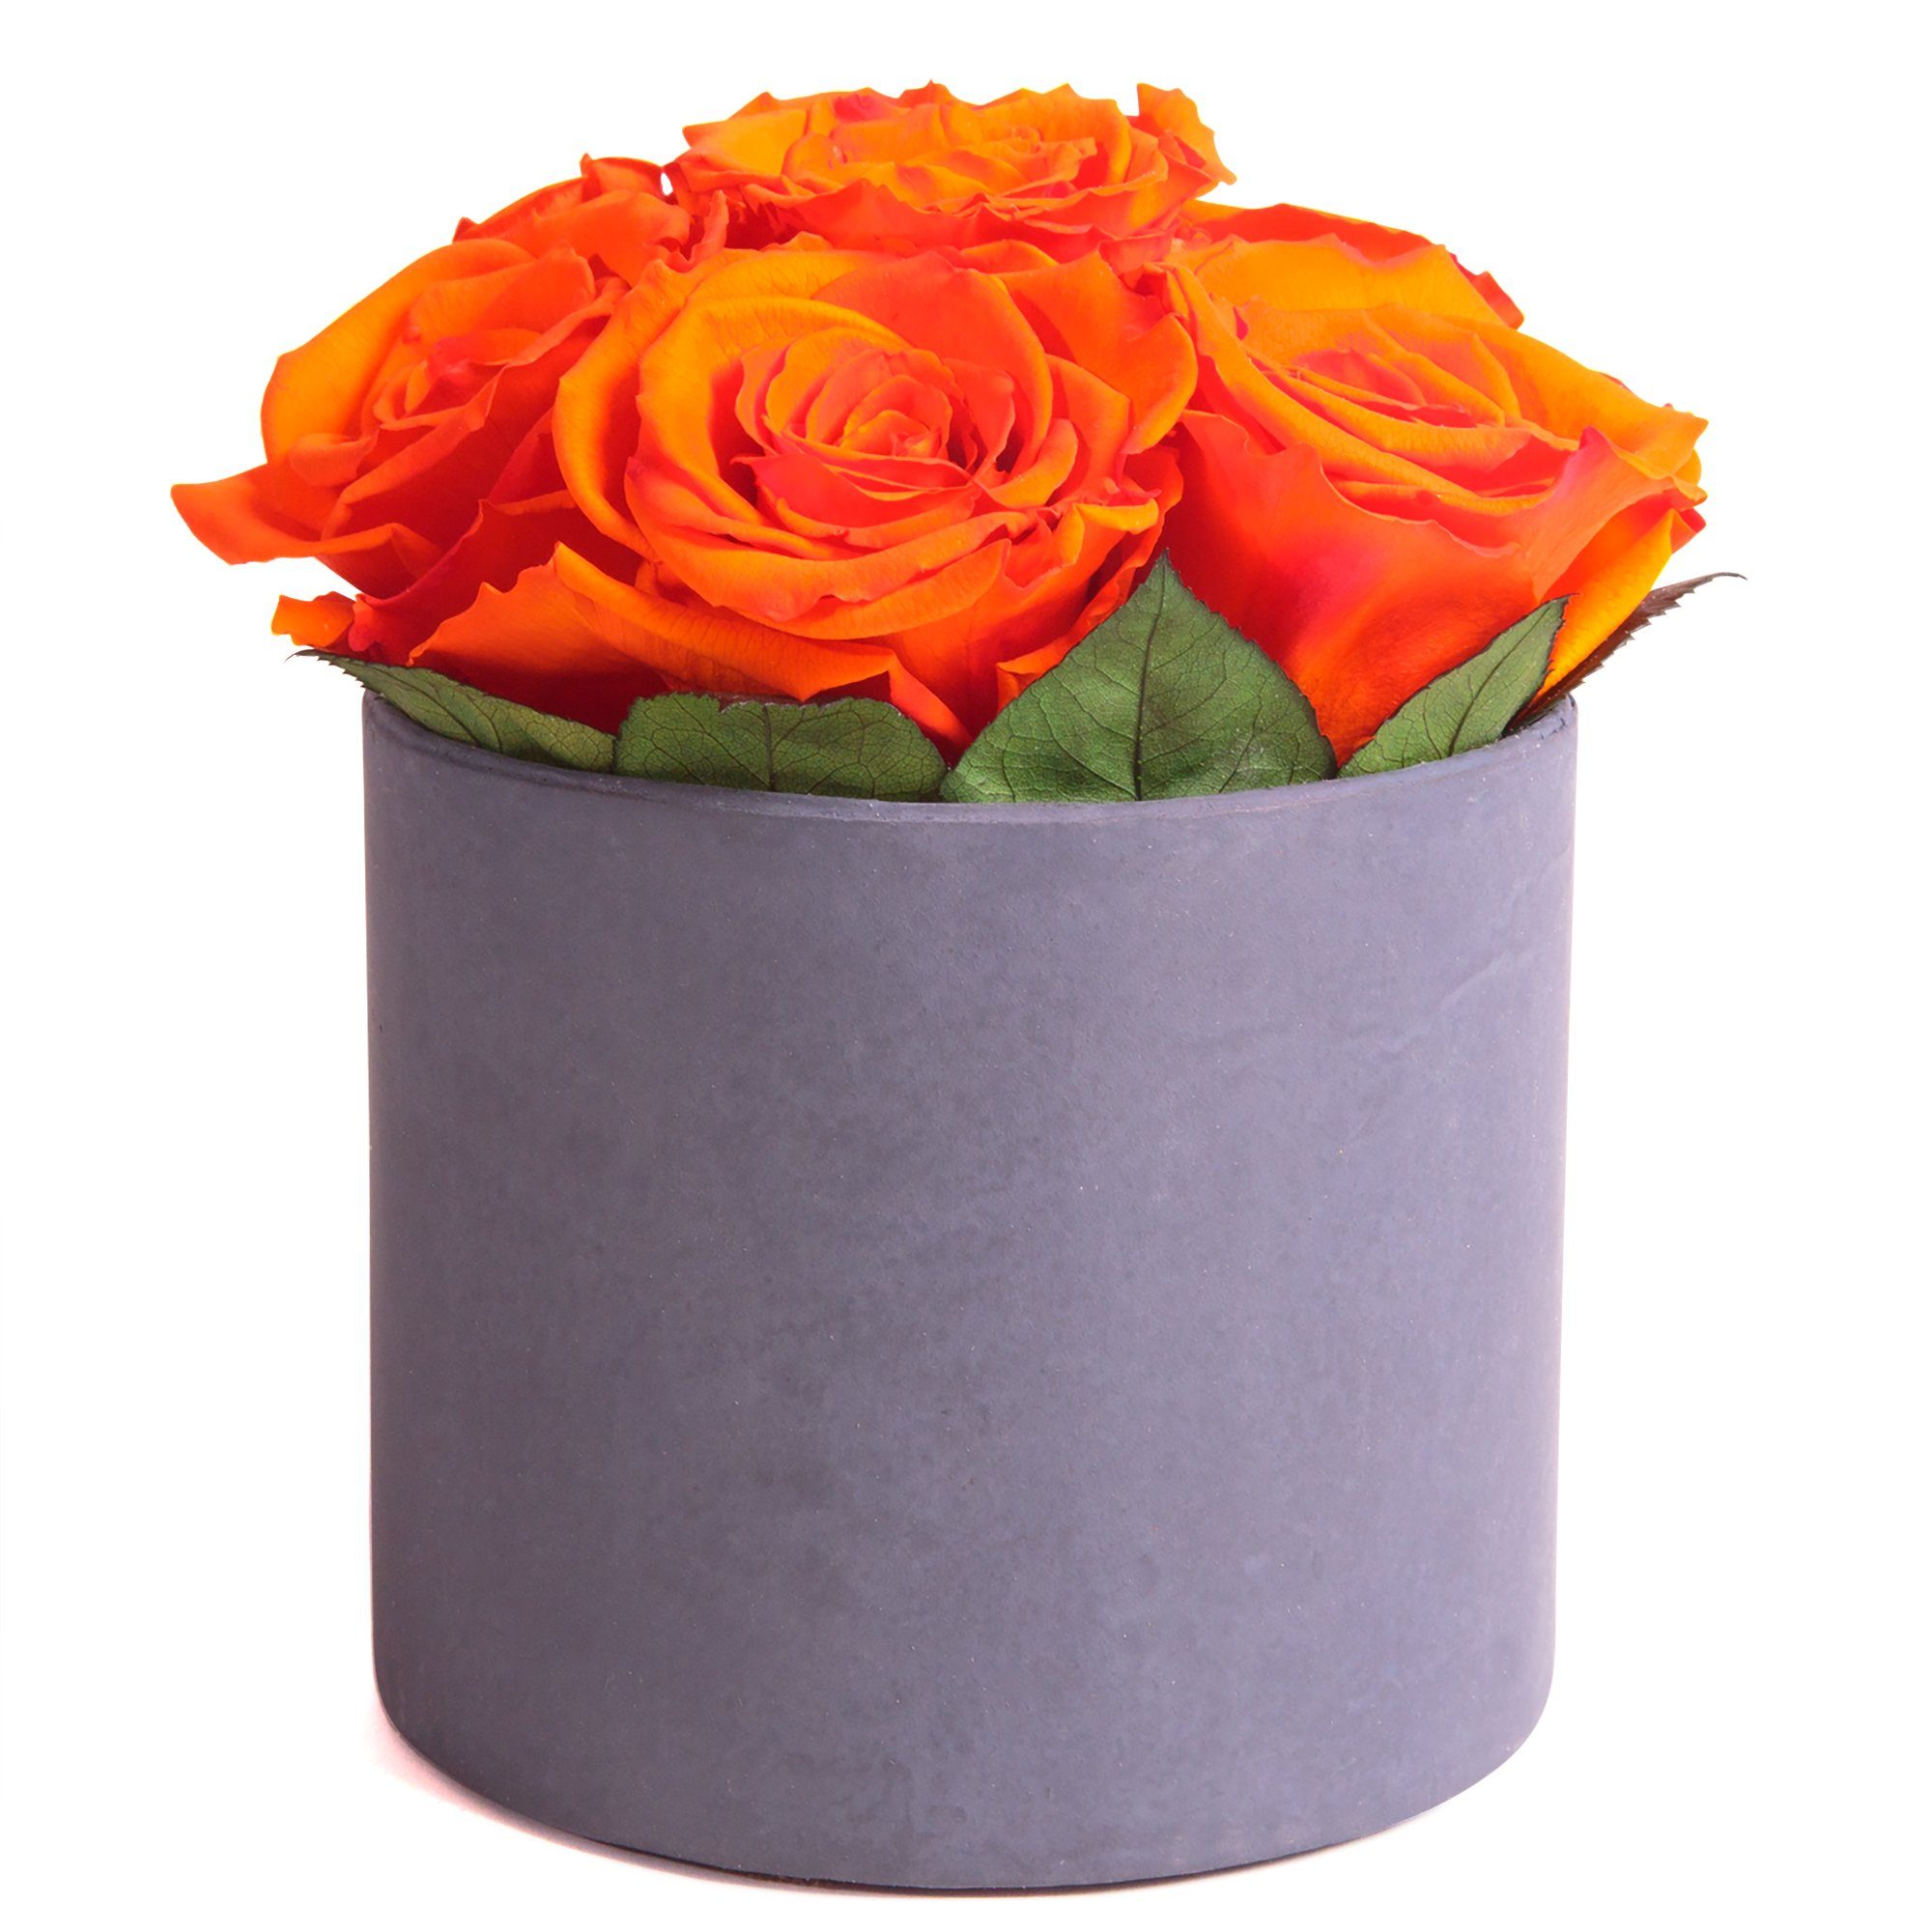 Höhe Rosen Rose, Gestecke Infinity in 15 SCHULZ Papiertopf Rosen Orange Heidelberg, in ROSEMARIE cm, ewige Zement finished Vase im Blumenvase Gesteck